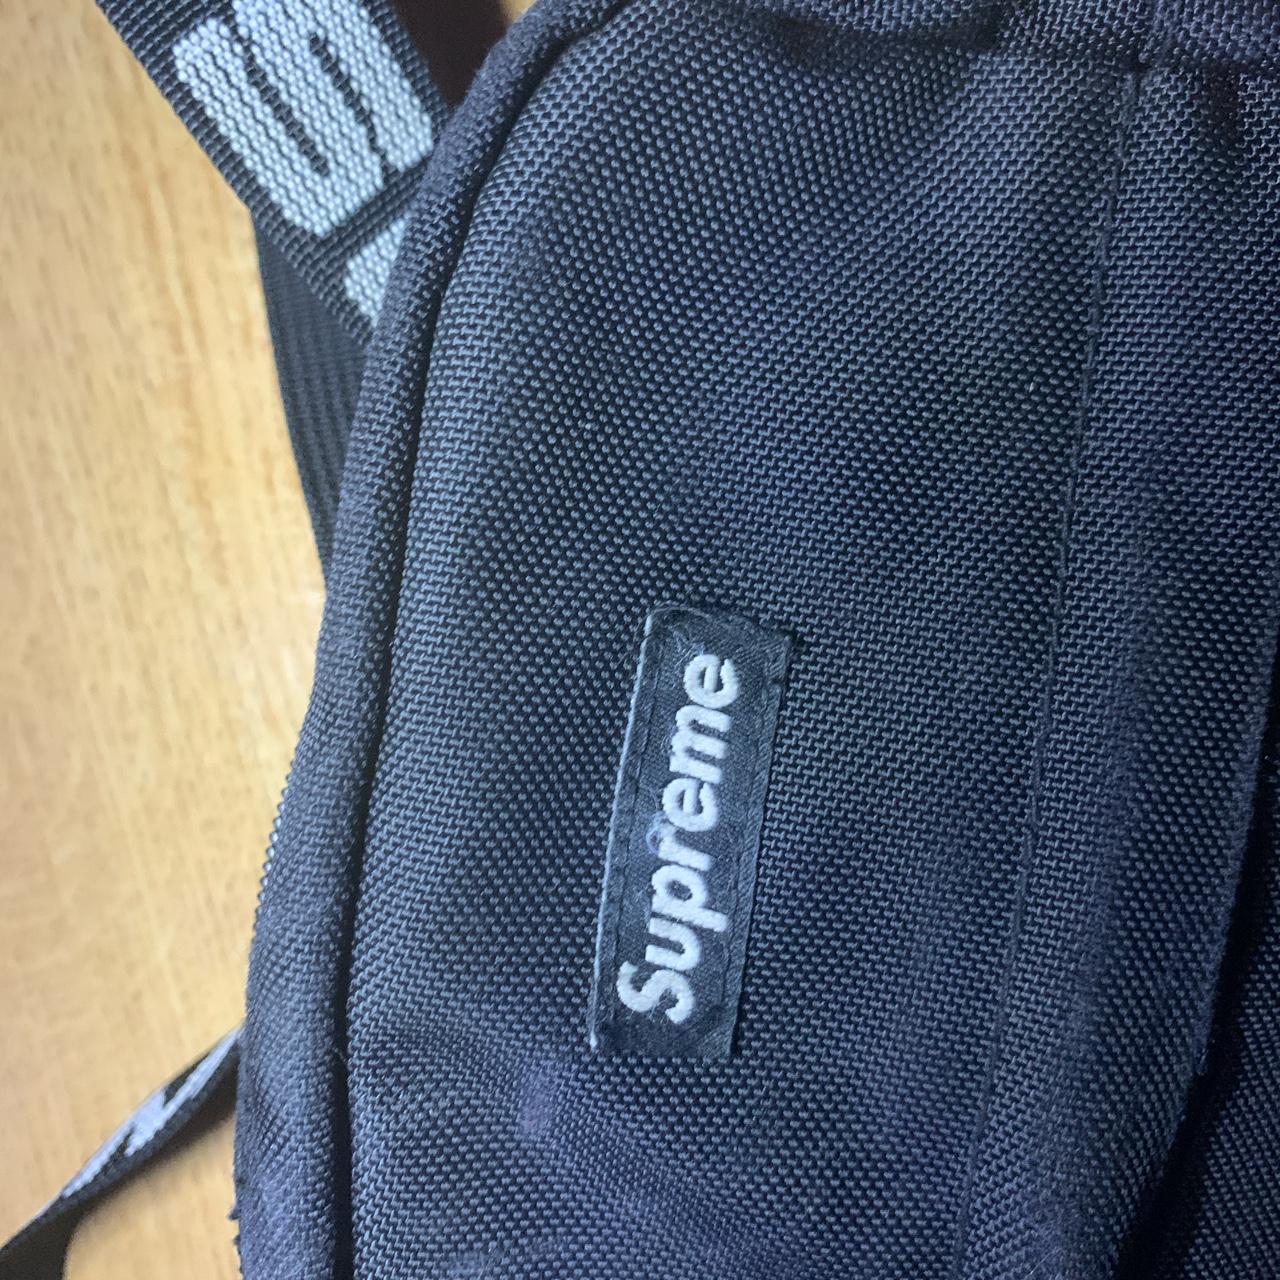 Red ss18 supreme bag Brand new - Depop